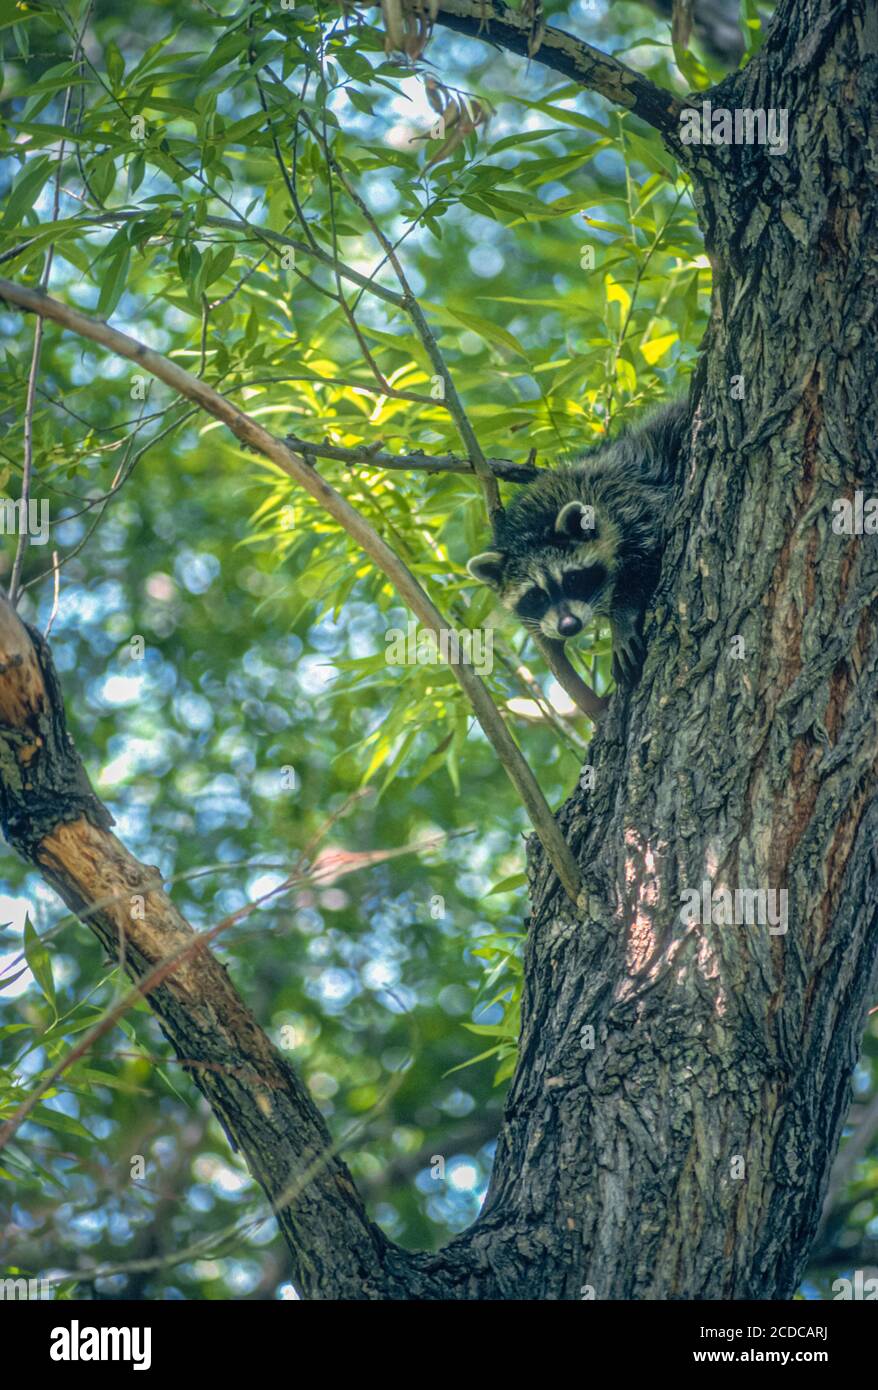 Giovane Raccoon americano (Procyon lotor) in posizione curiosa si aggrappano a Narrowleaf Cottonwood Tree, Lakewood Colorado USA. Da Kodachrome trasparenza. Foto Stock